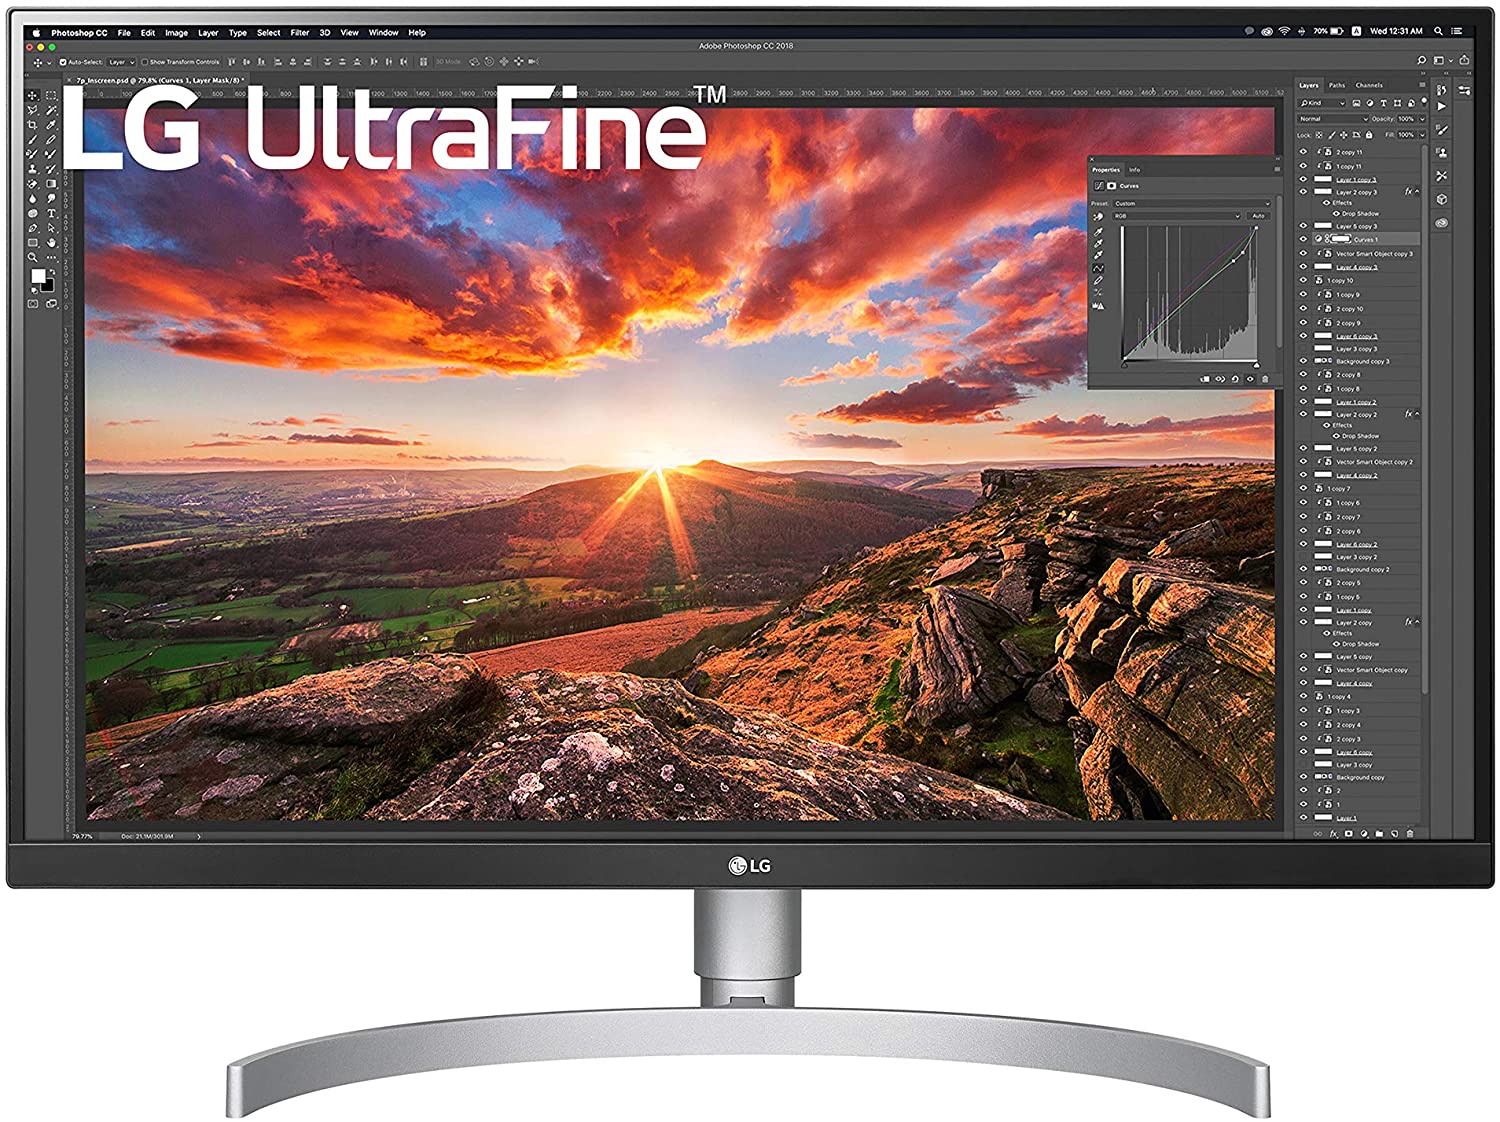 LG 27UN850-W Ultrafine UHD Monitor